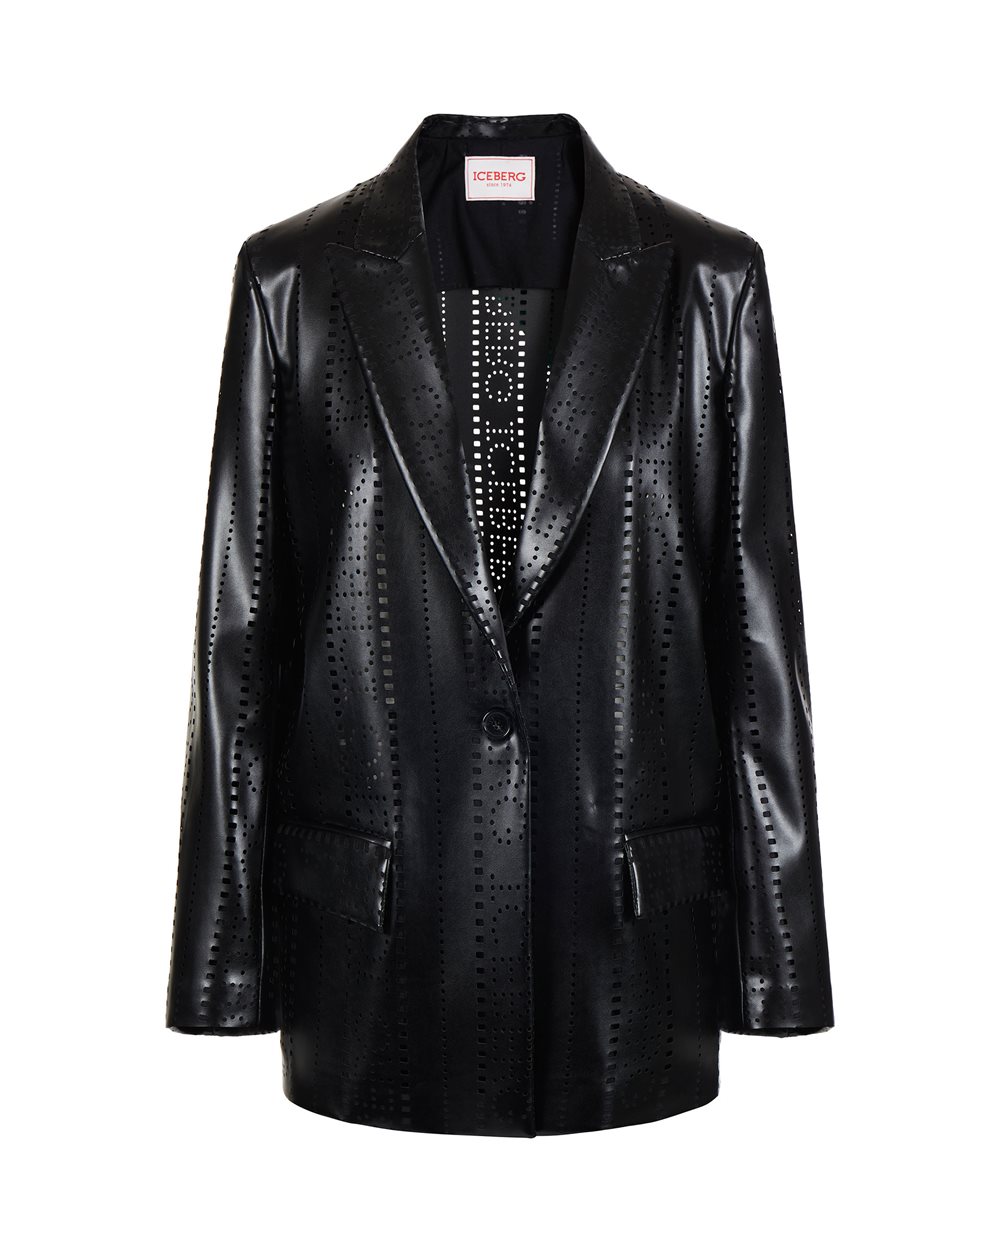 Women's coats & jackets | Iceberg new collection | Online shop